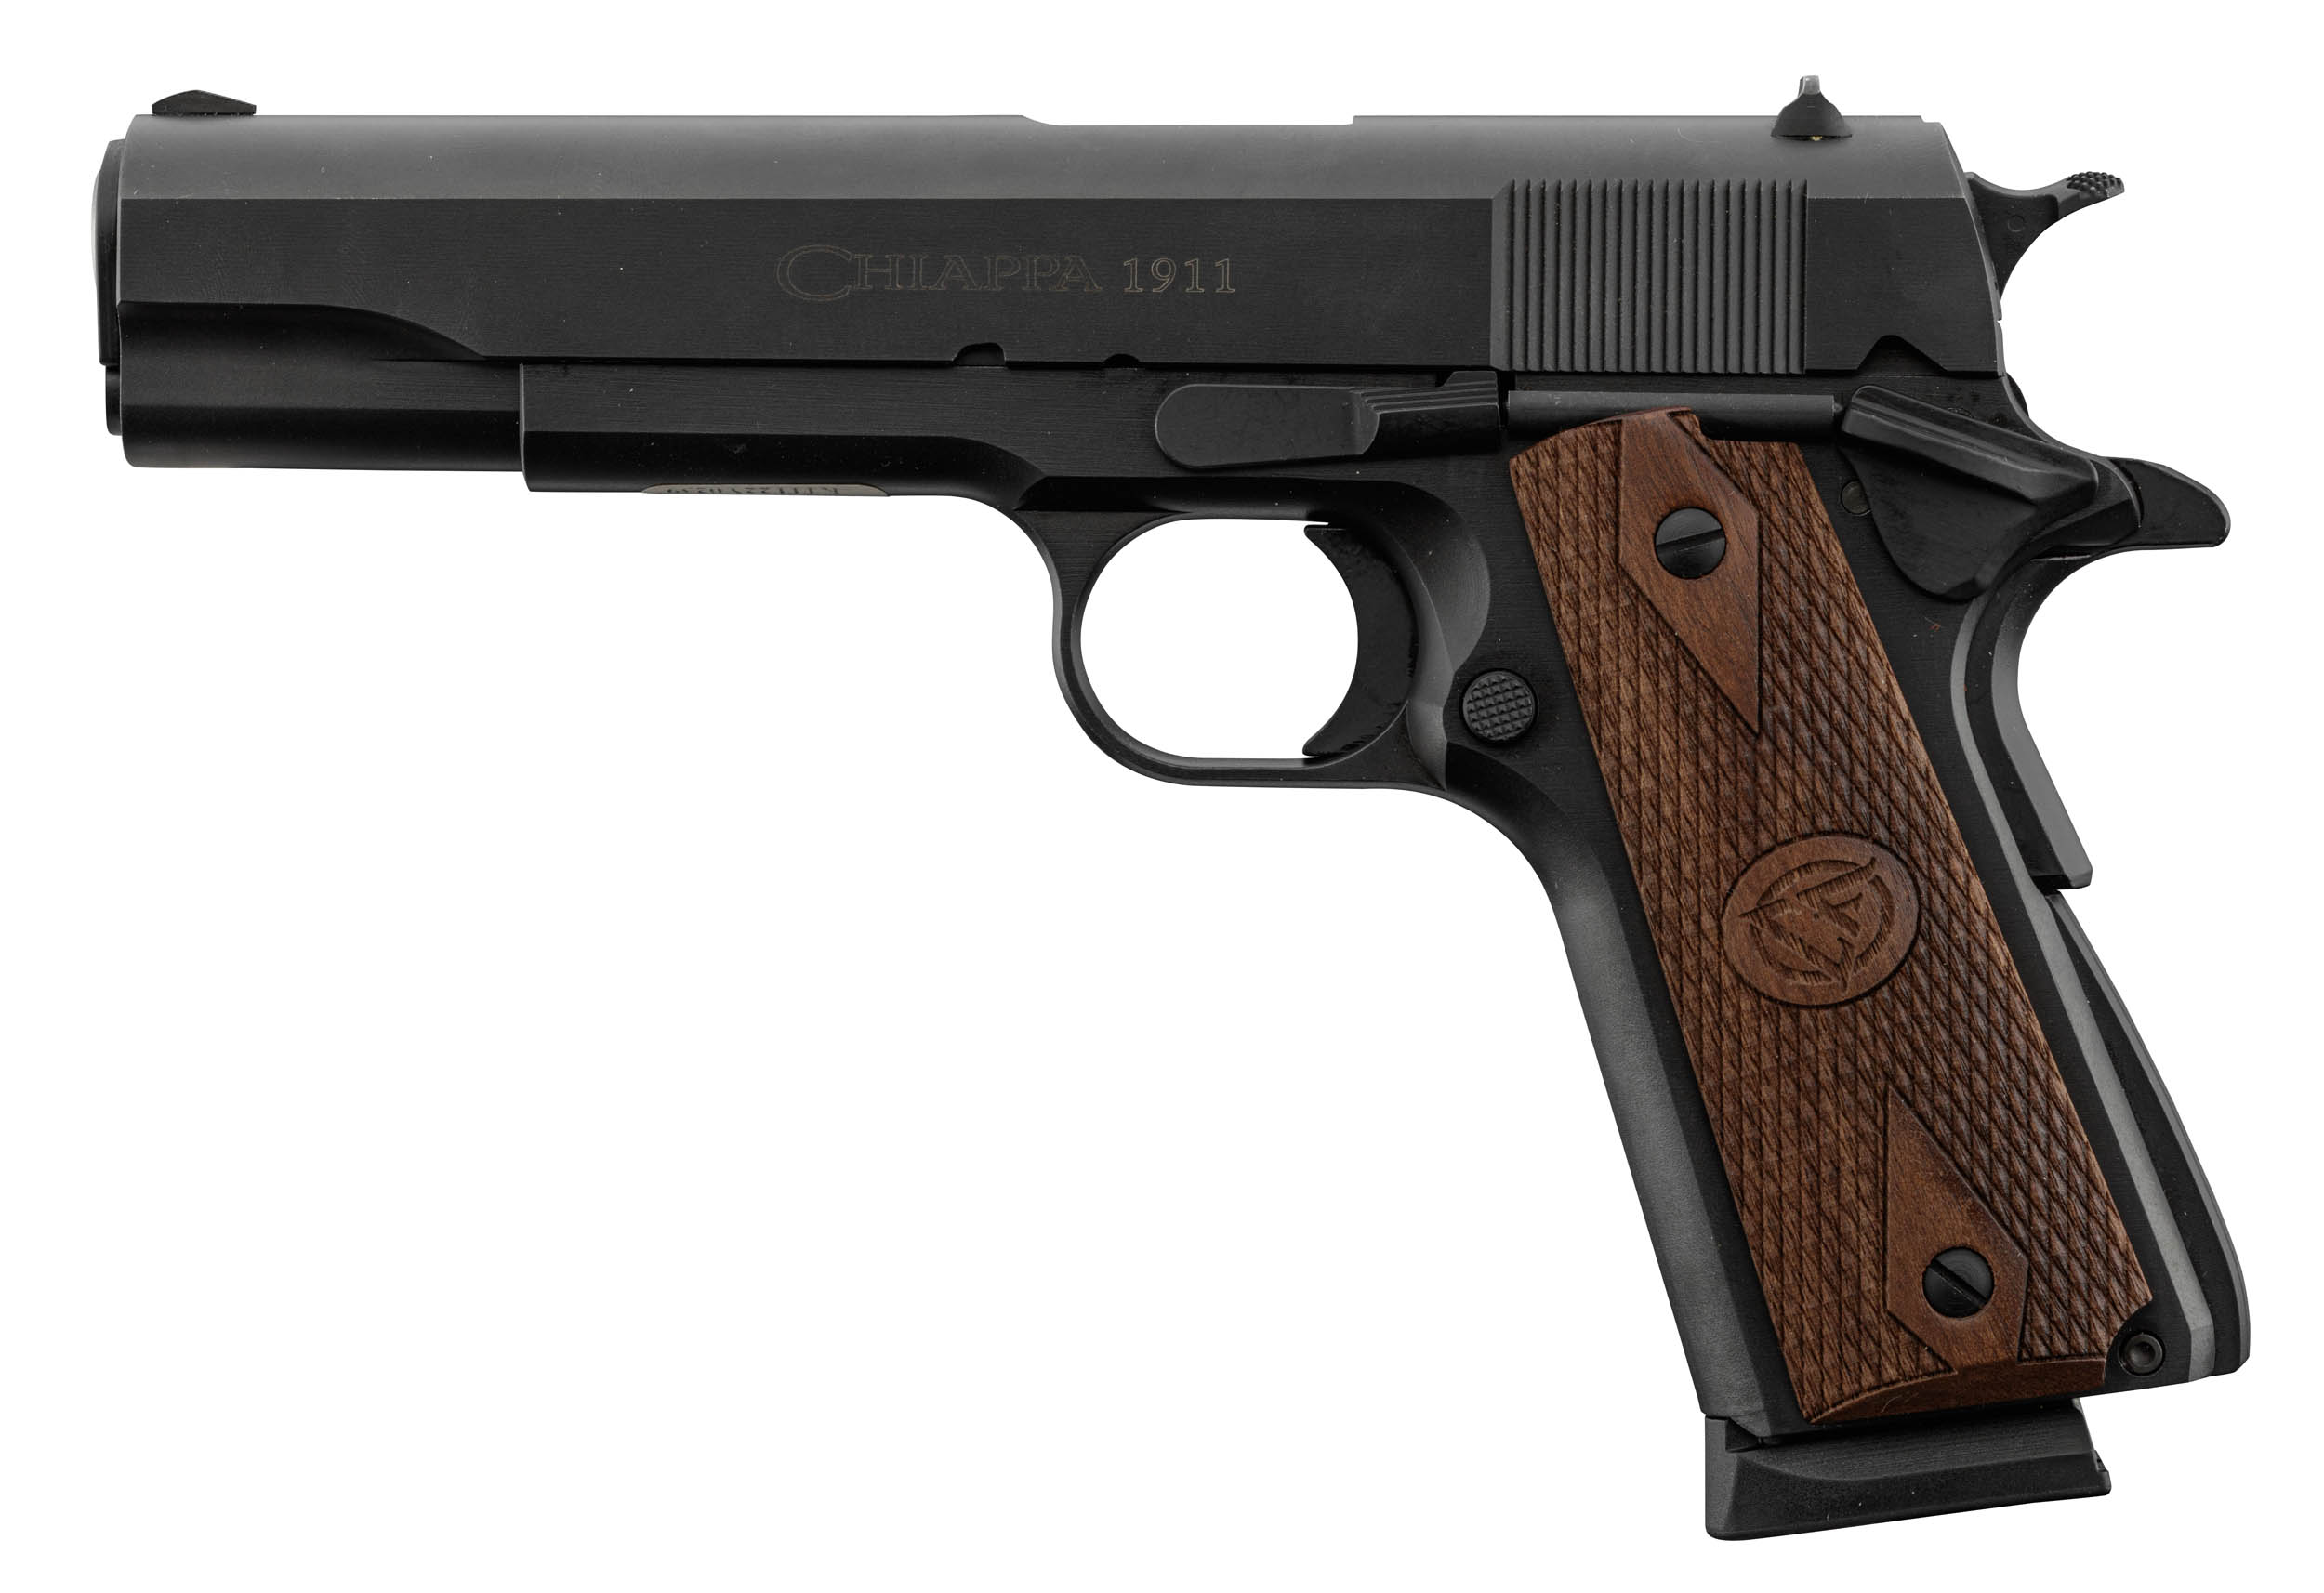 ADP621-04 Pistolet CHIAPPA 1911 Field Grade noir cal 45 ACP - ADP621